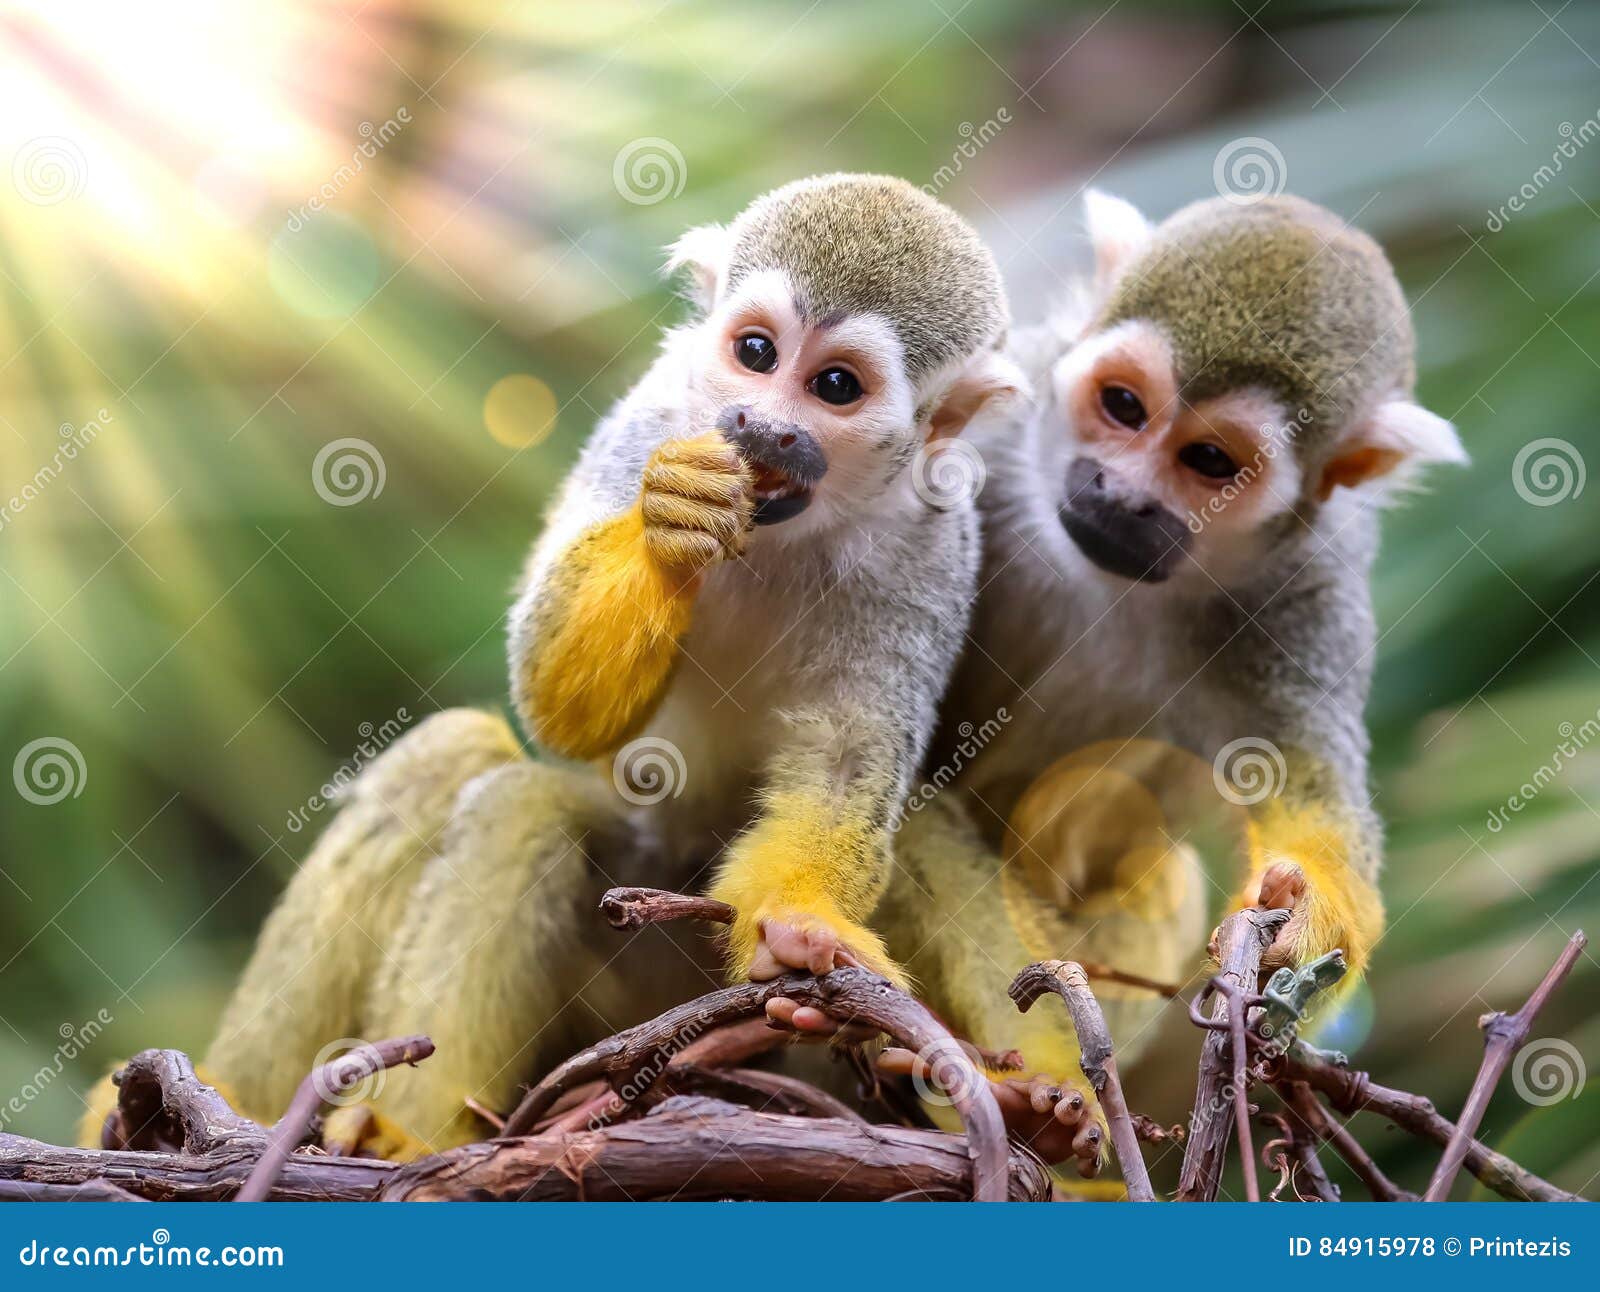 Foto de Macacos Fofos e mais fotos de stock de Animal - Animal, Animal  selvagem, Exterior - iStock